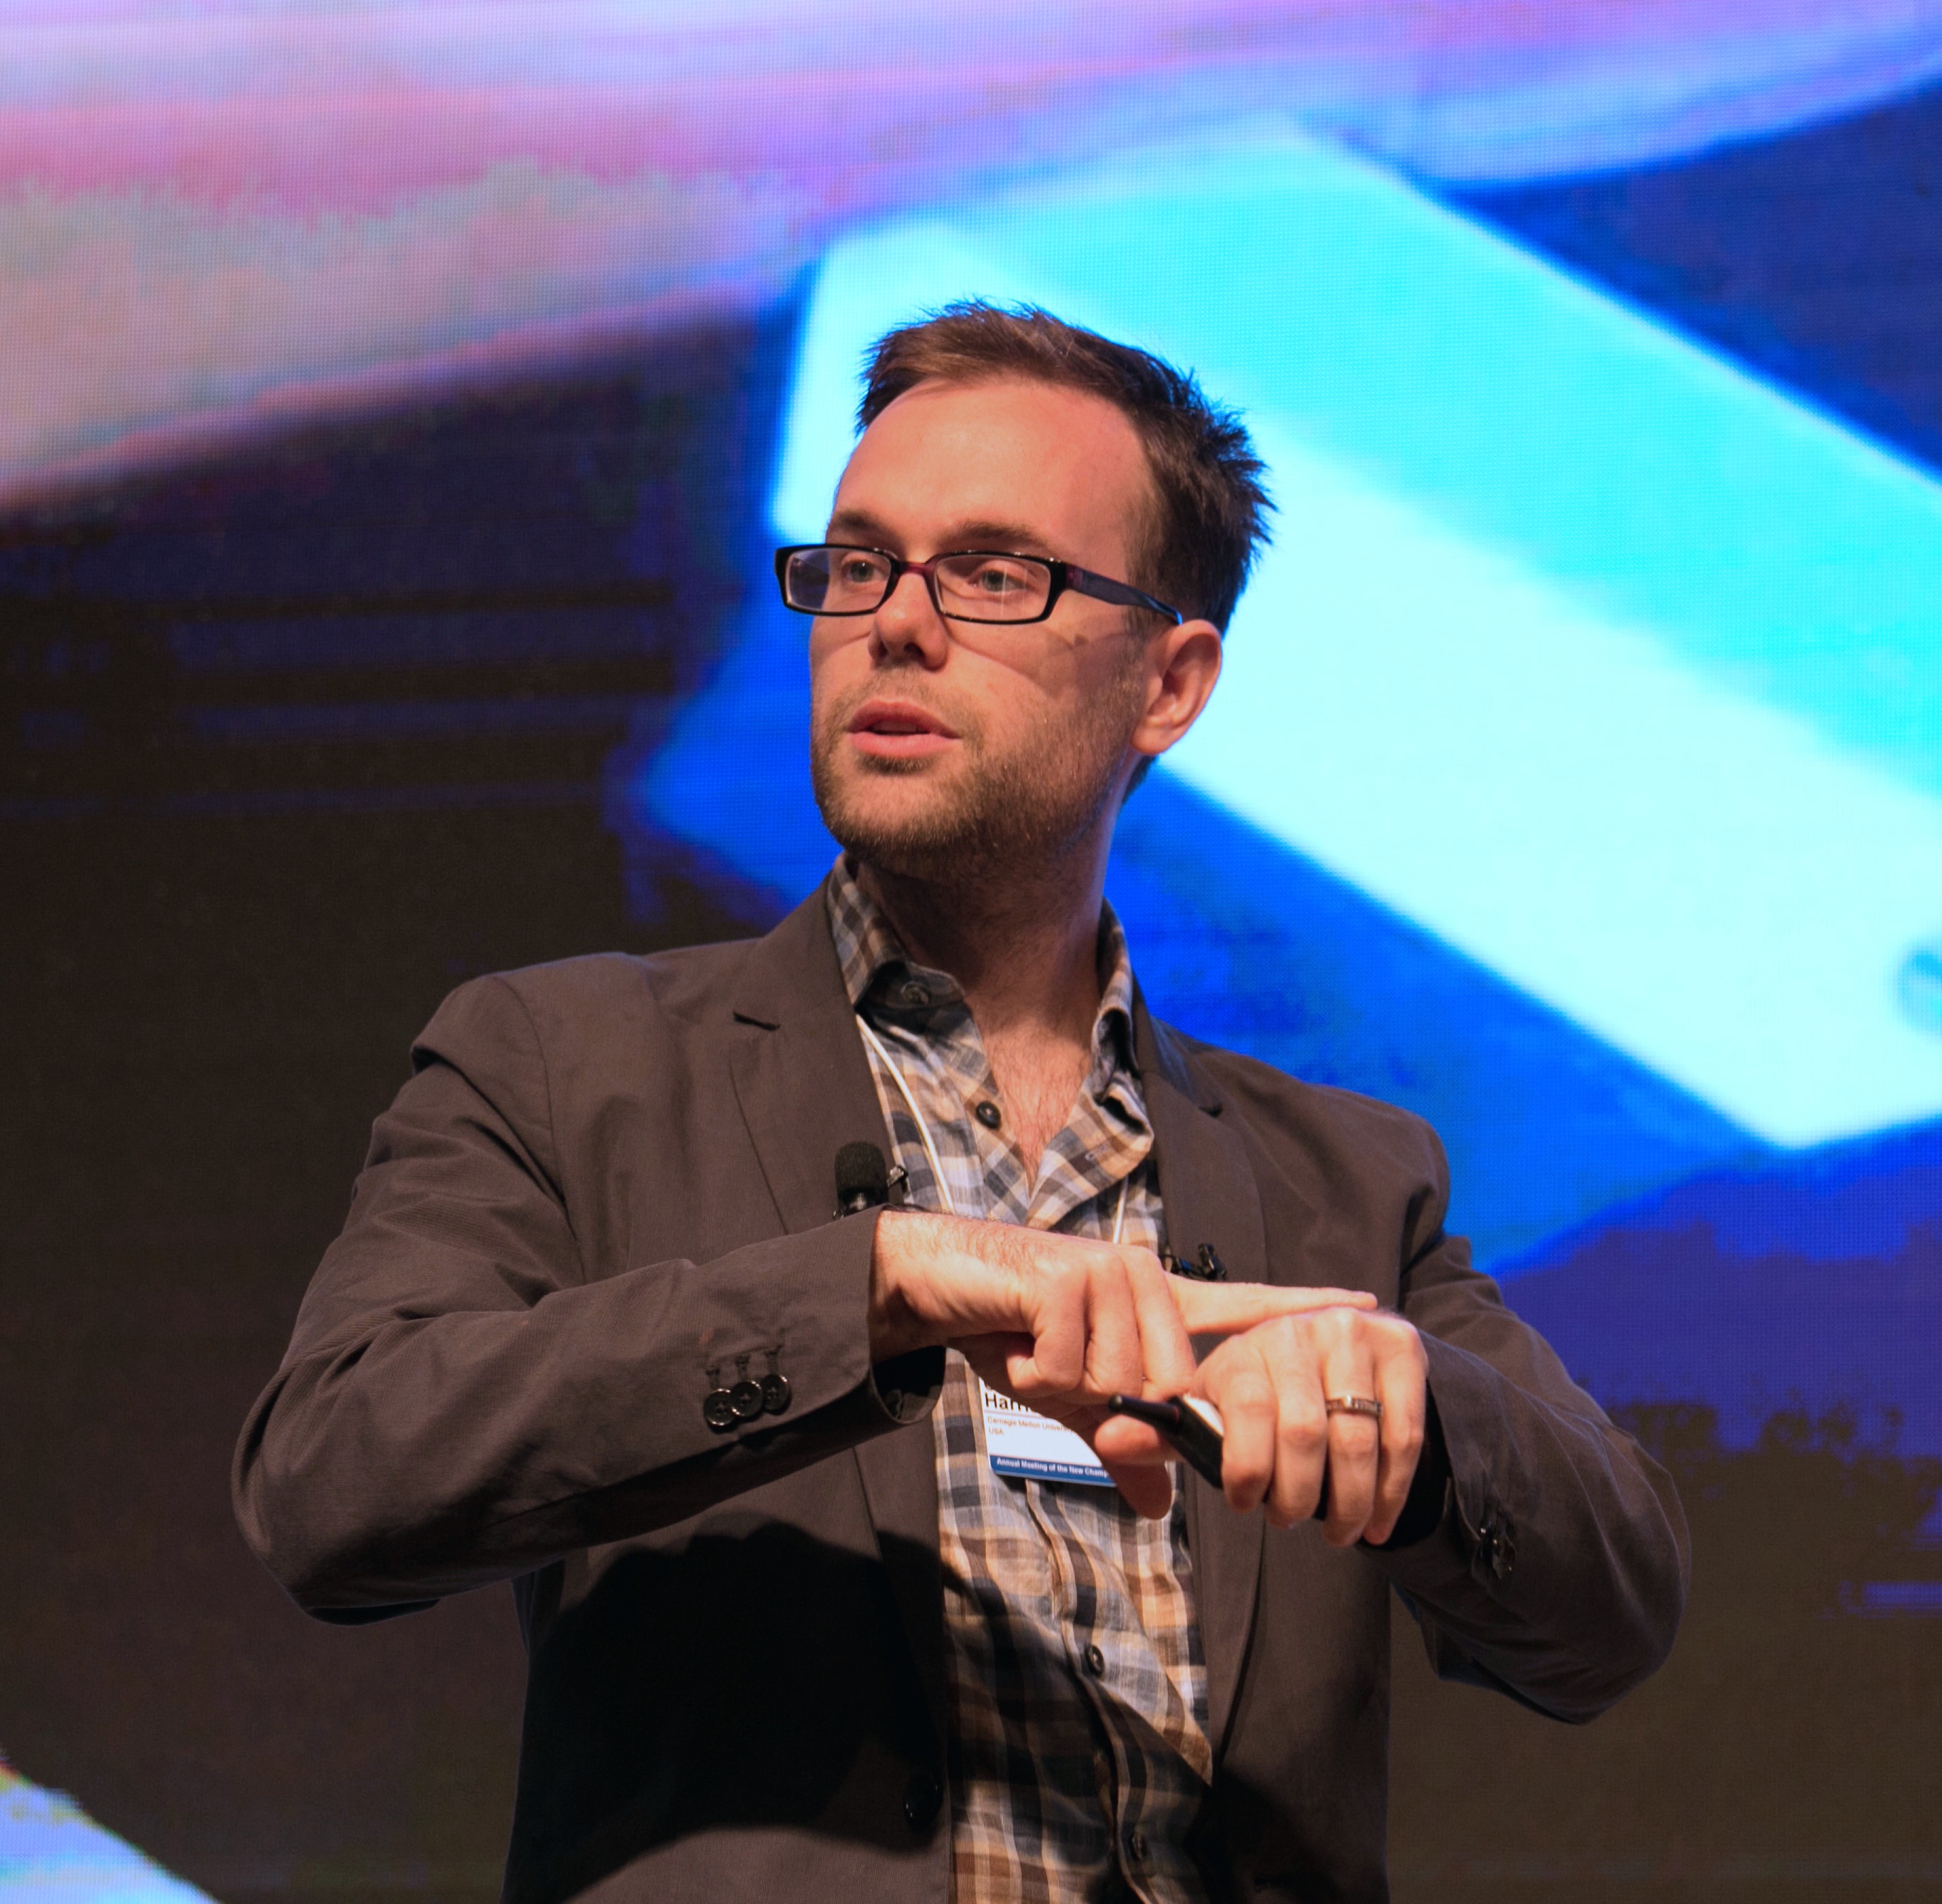 Chris Harrison presenting smartwatches